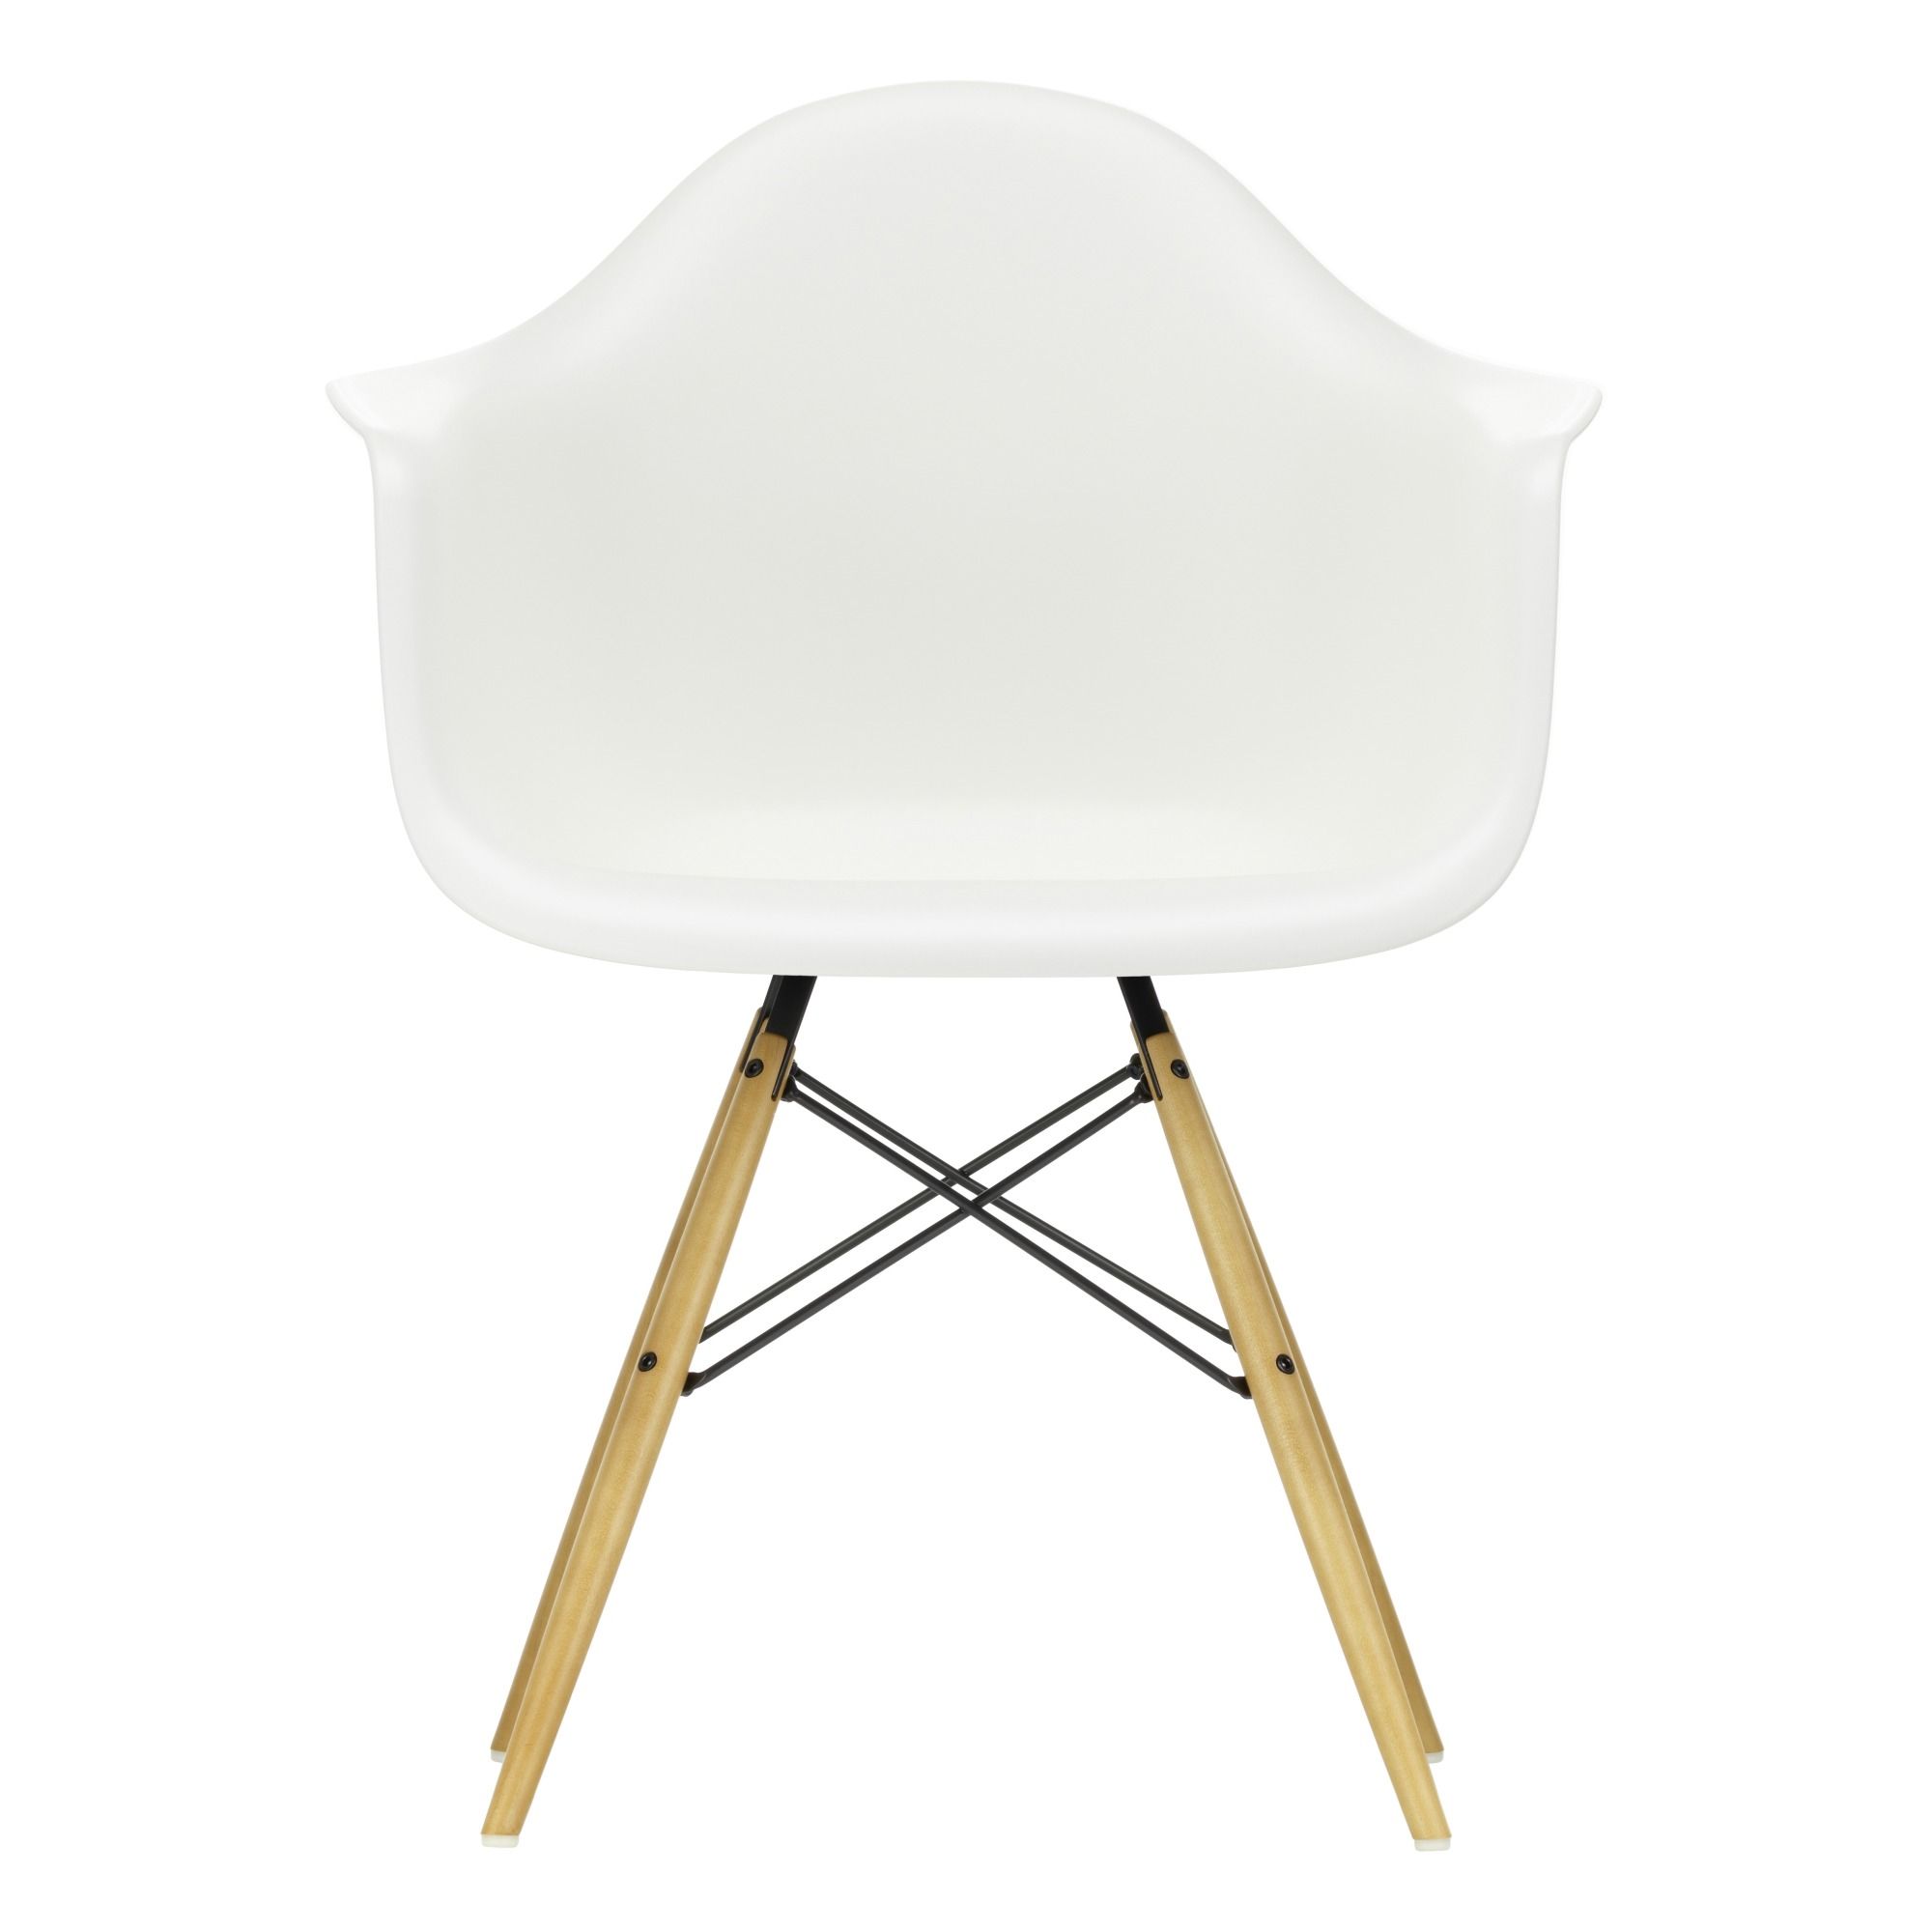 Slip schoenen Meesterschap Supplement DAW Chair - Charles & Ray Eames, 1950 - White Vitra Design Adult - Smallable